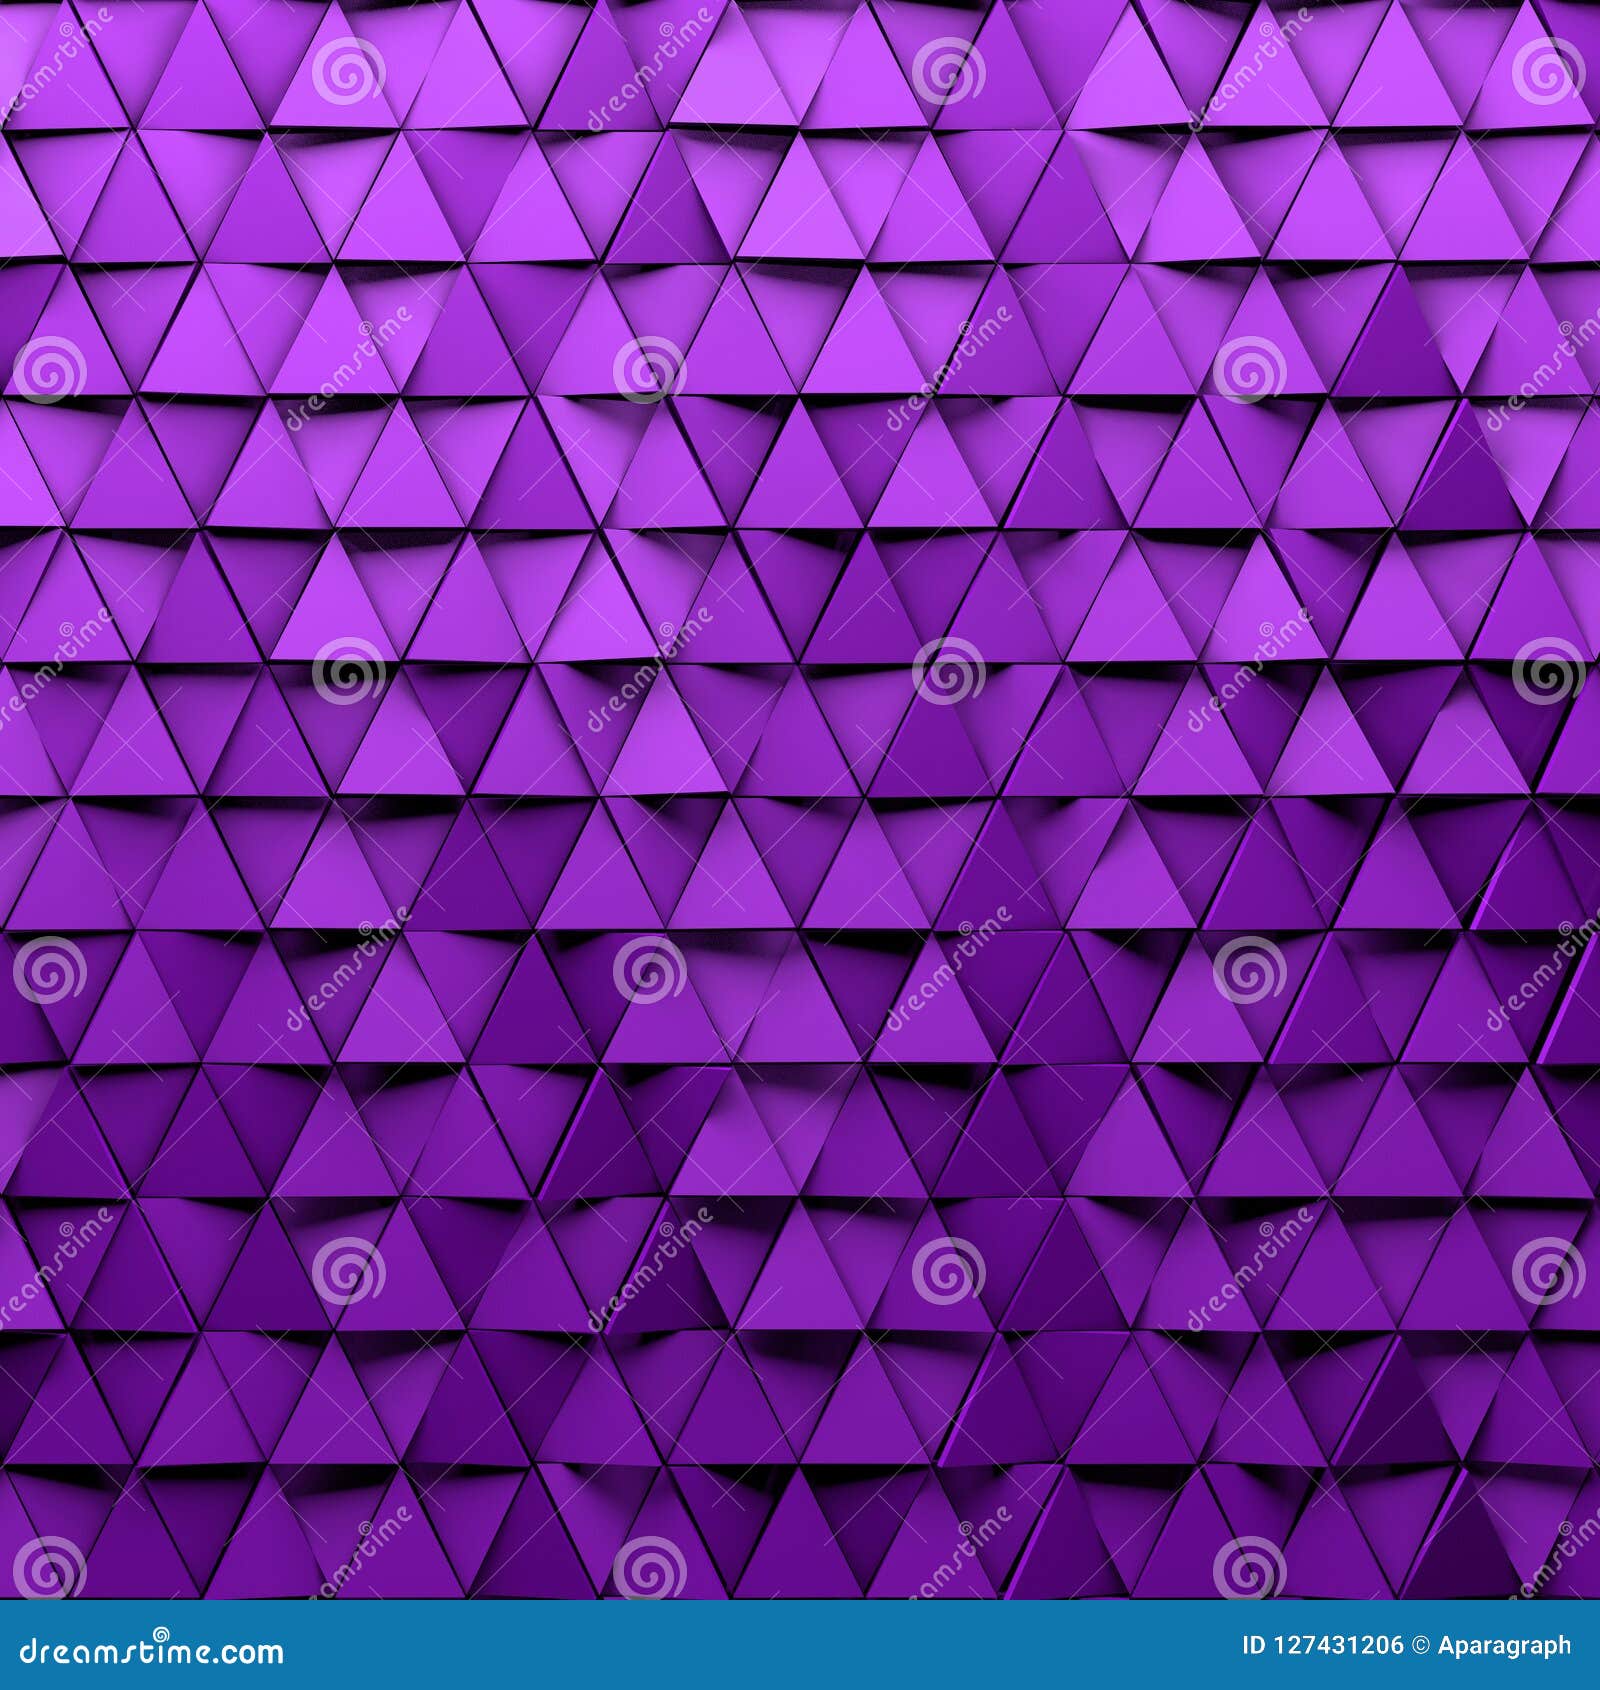 Cgi 3d Triangular Wallpaper Background Stock Illustration